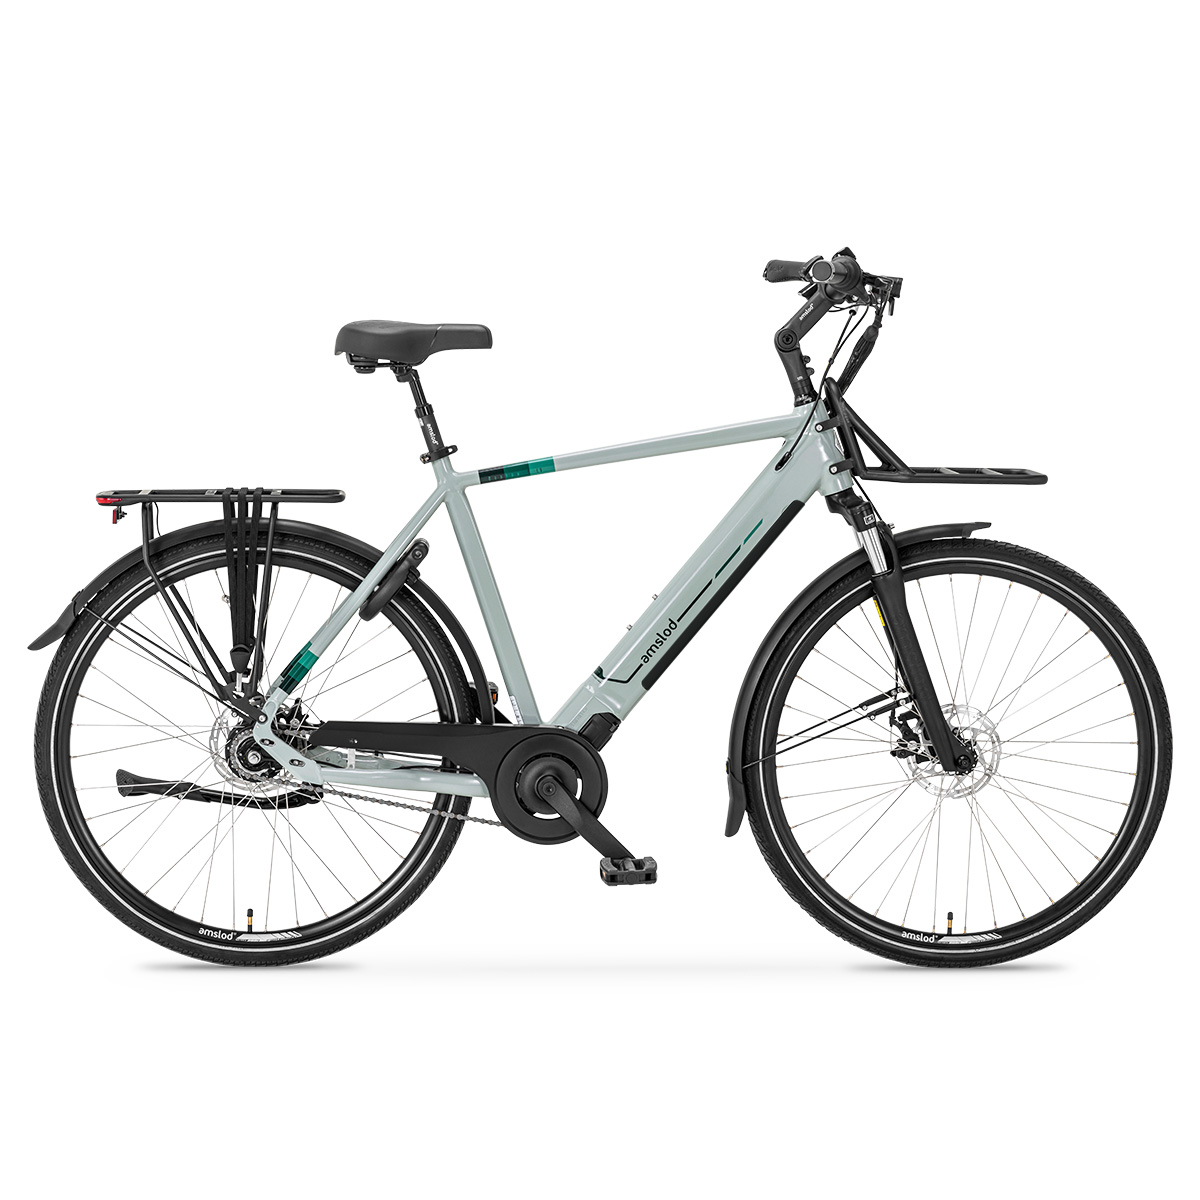 Amslod-elektrische-fiets-denton-stadsfiets-elektrisch-verende-voorvork2